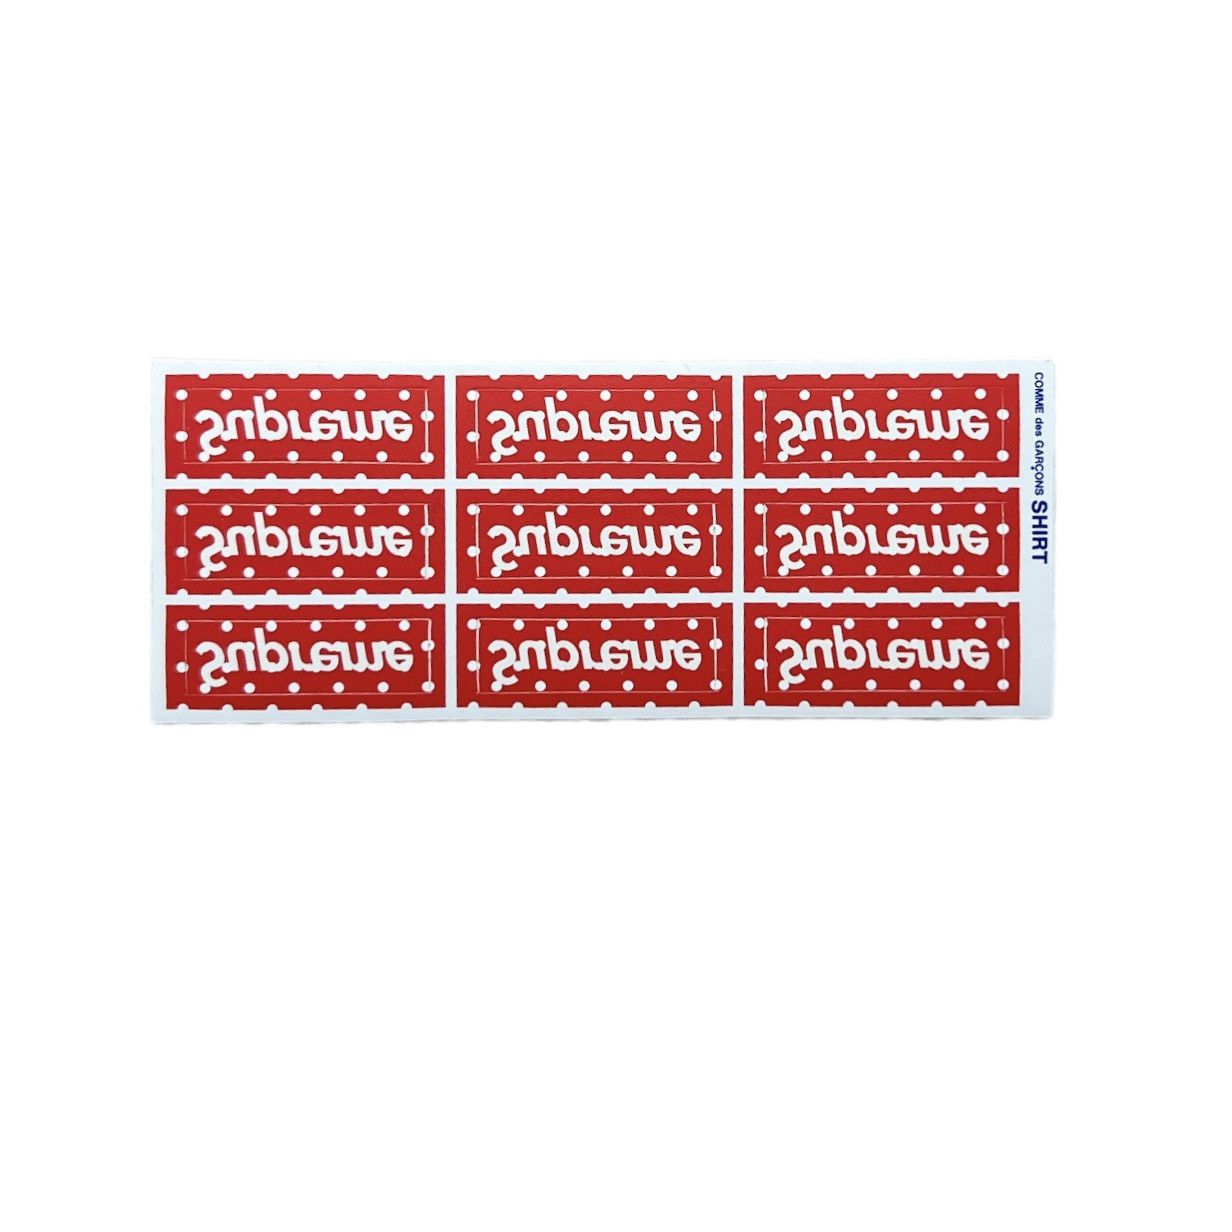 Comme Des Garcons Supreme Cdg Polka Dot Box Logo | Grailed